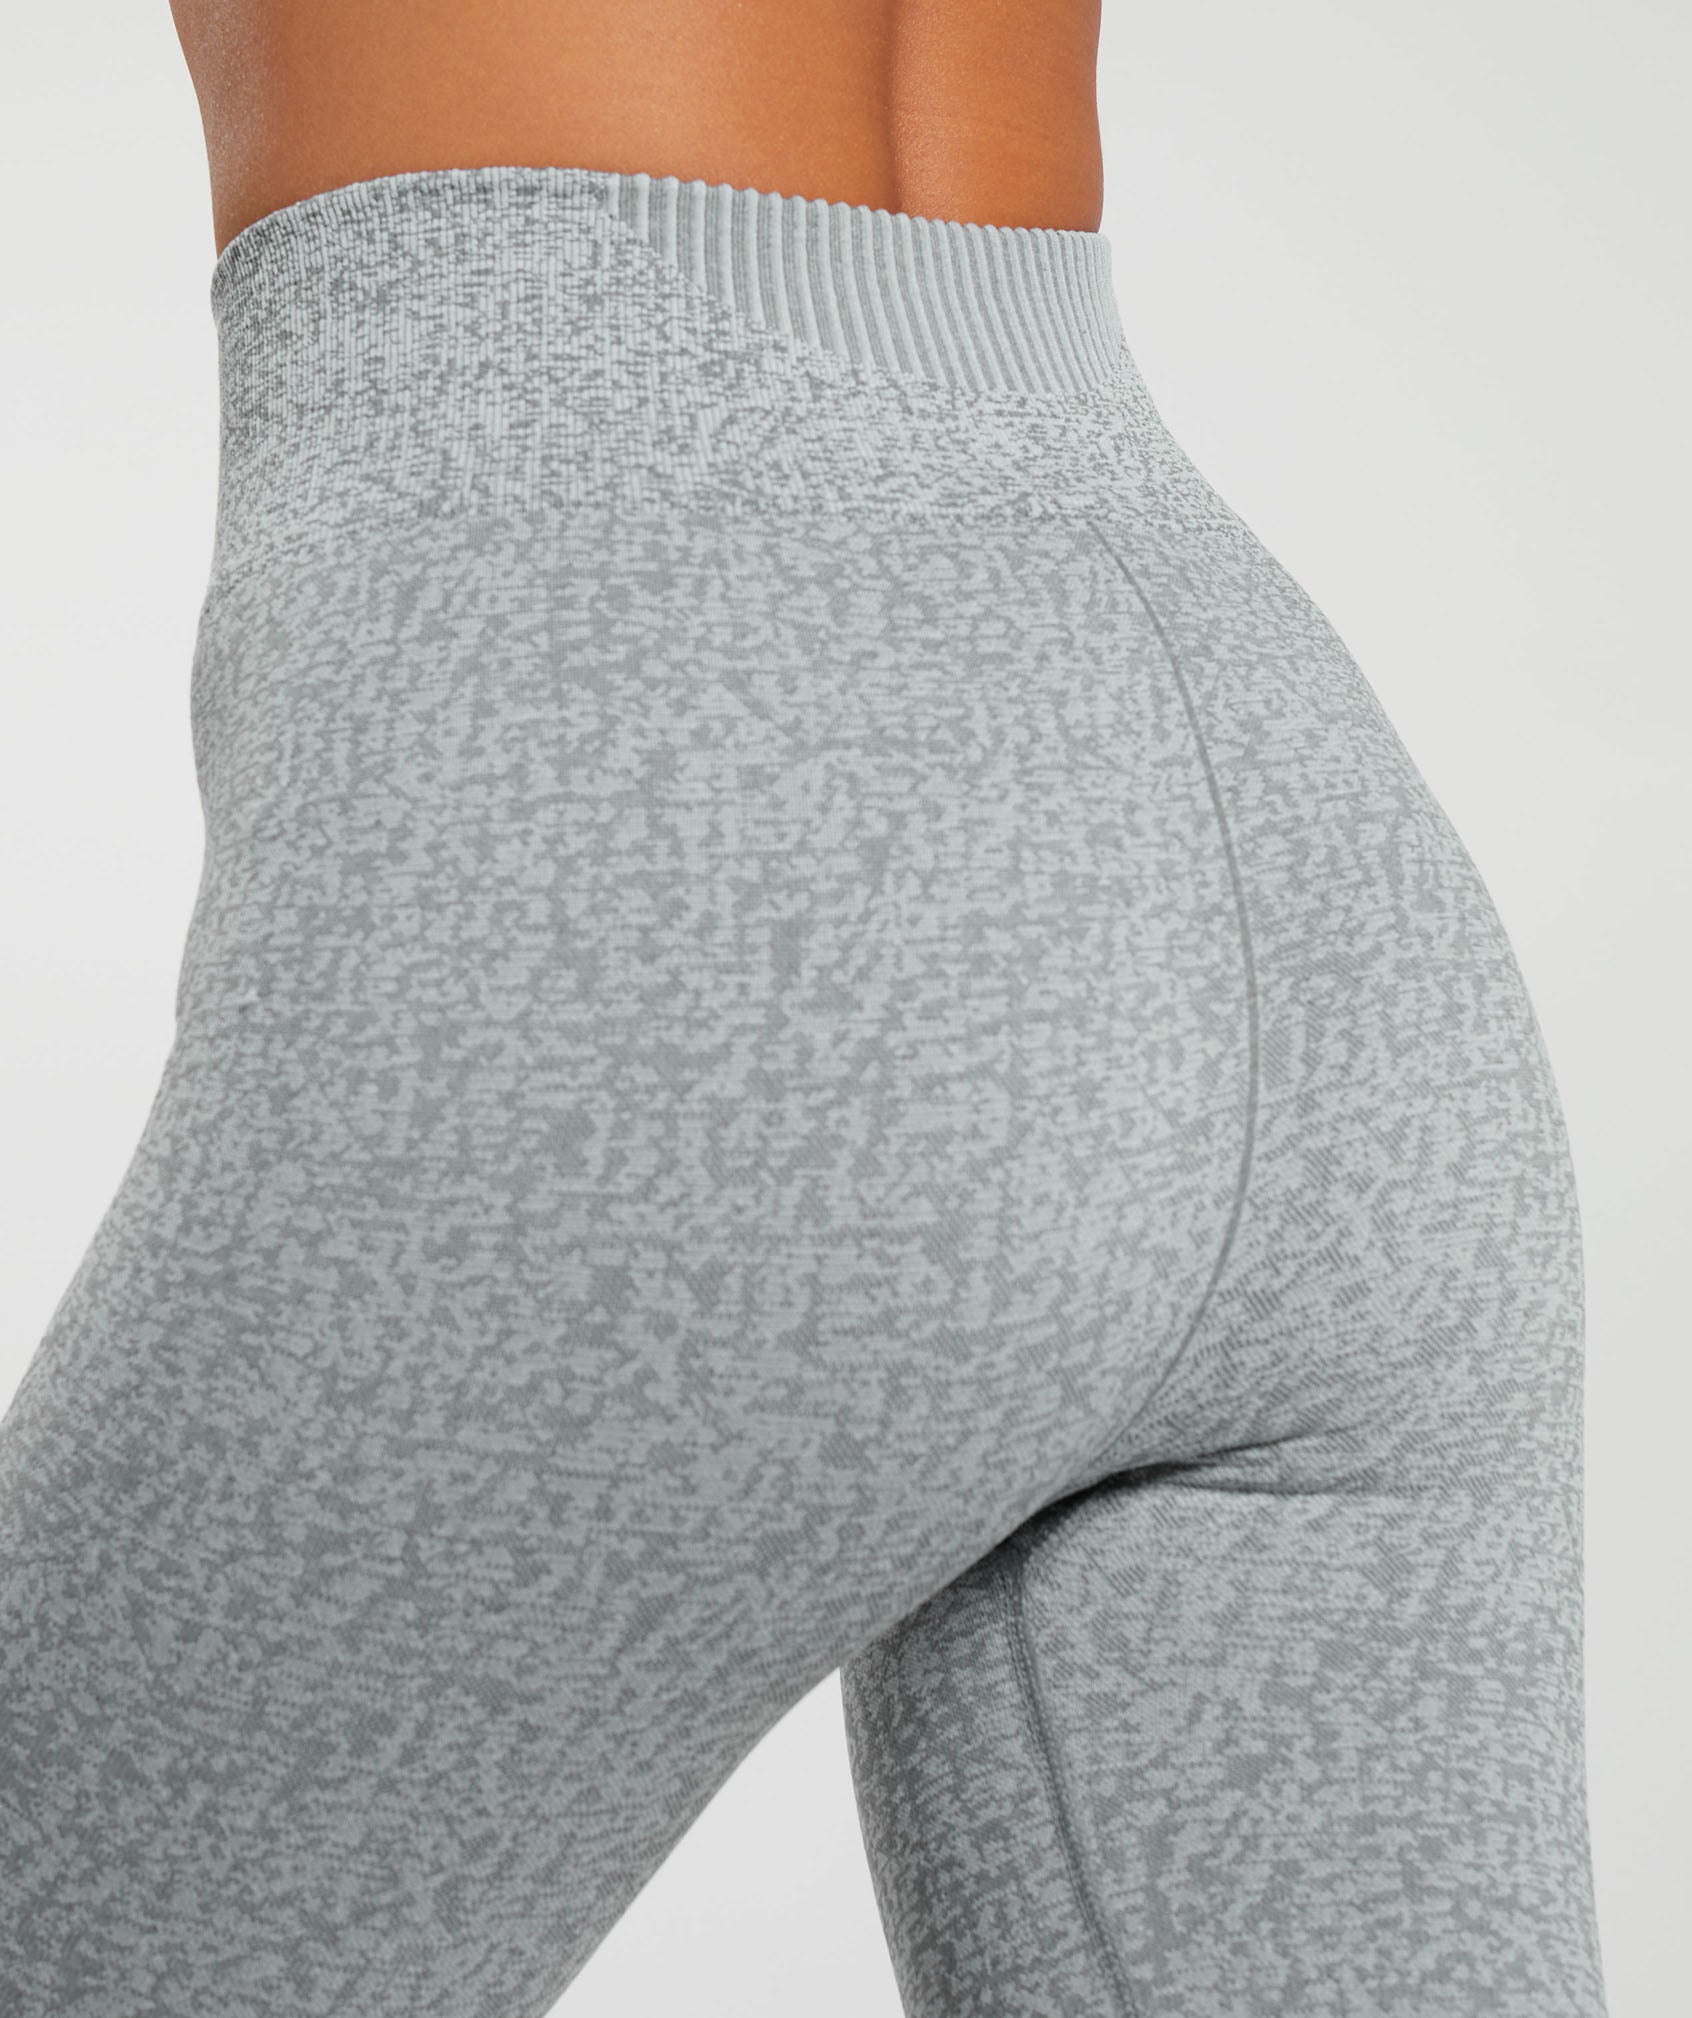 Buy Grey Leggings for Women by Teamspirit Online | Ajio.com